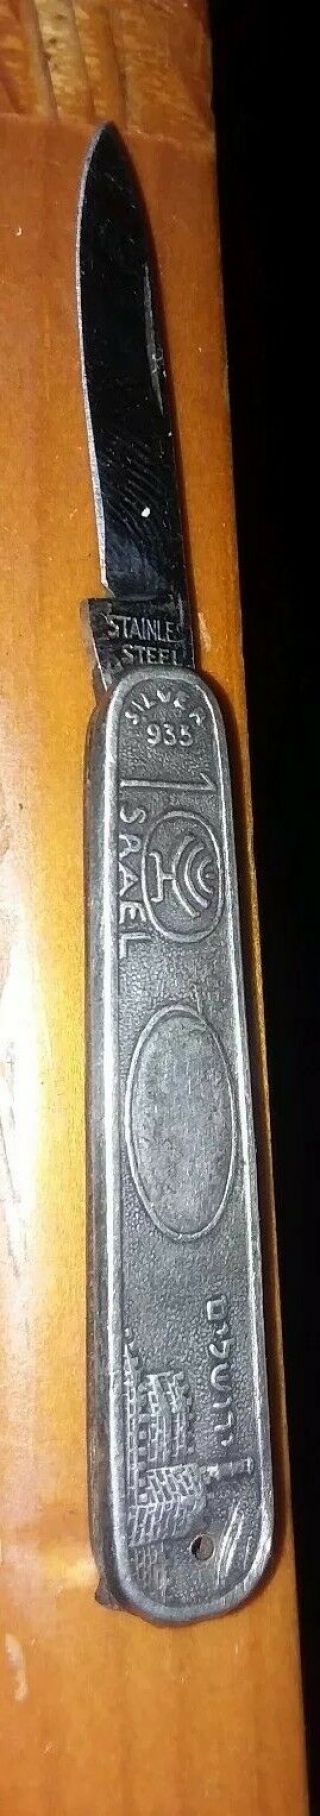 Sterling Silver Pocket Knife With Jewish Israeli Symbols